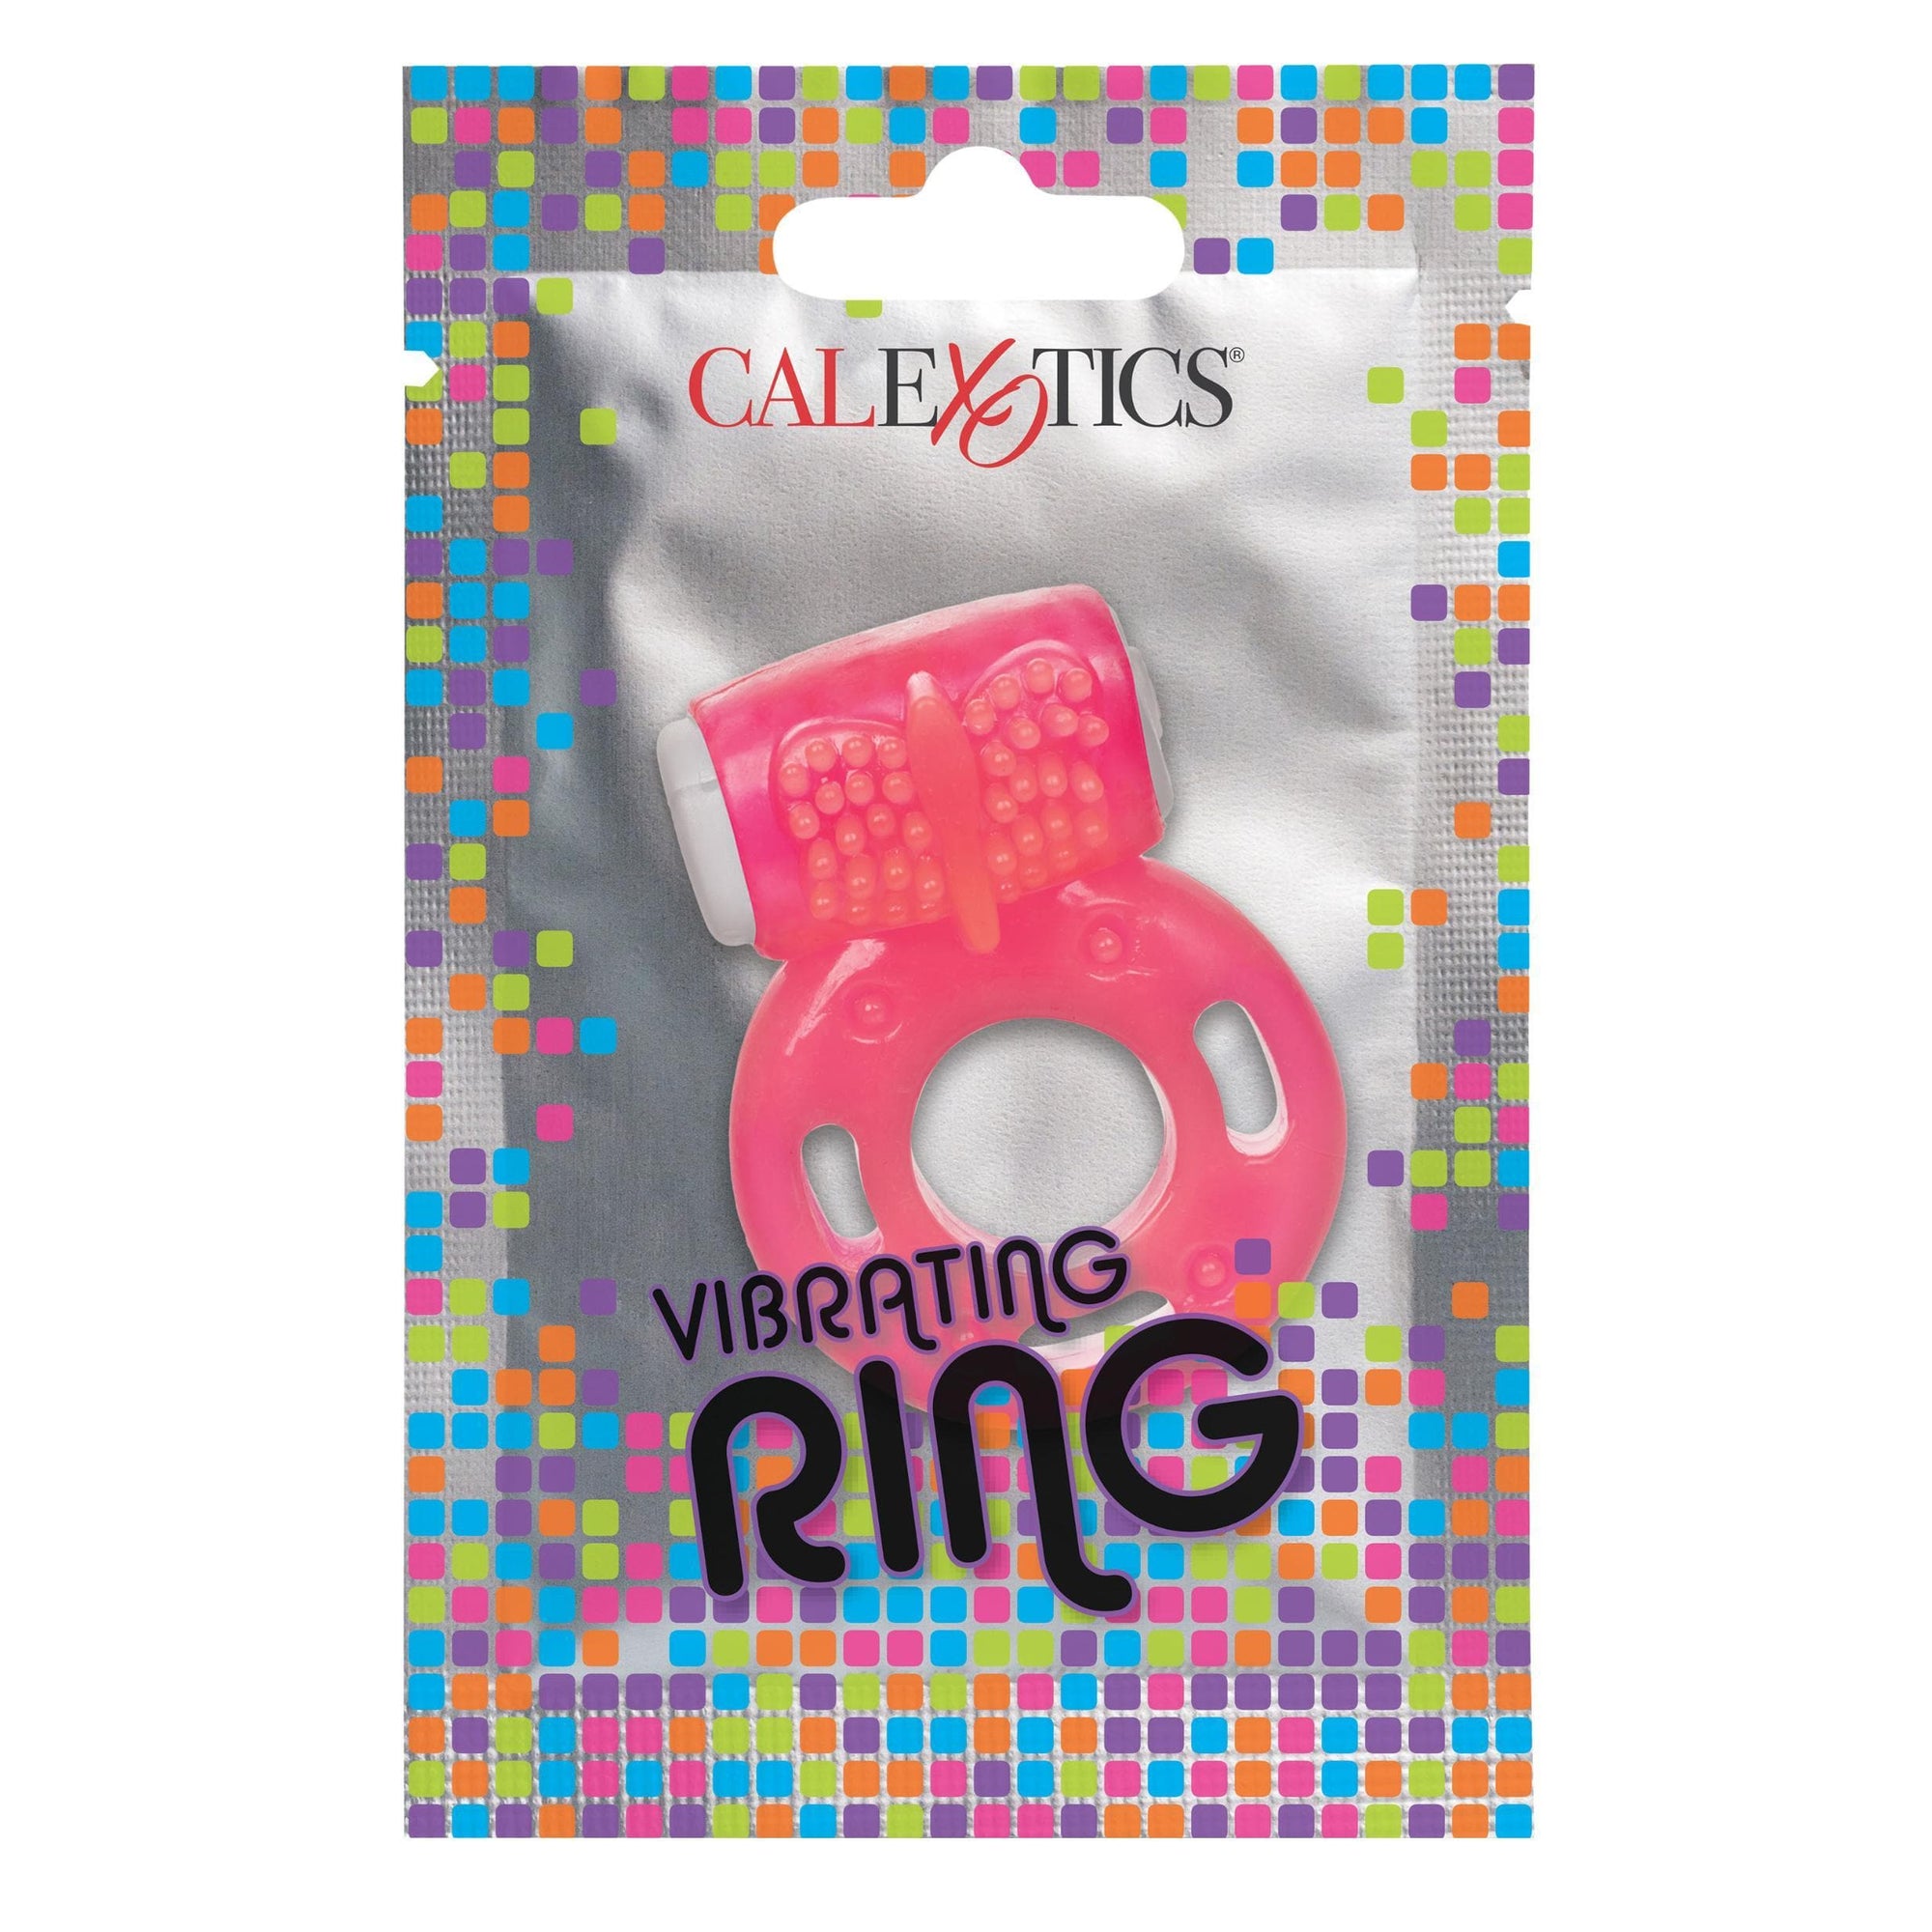  Vibrating cock rings